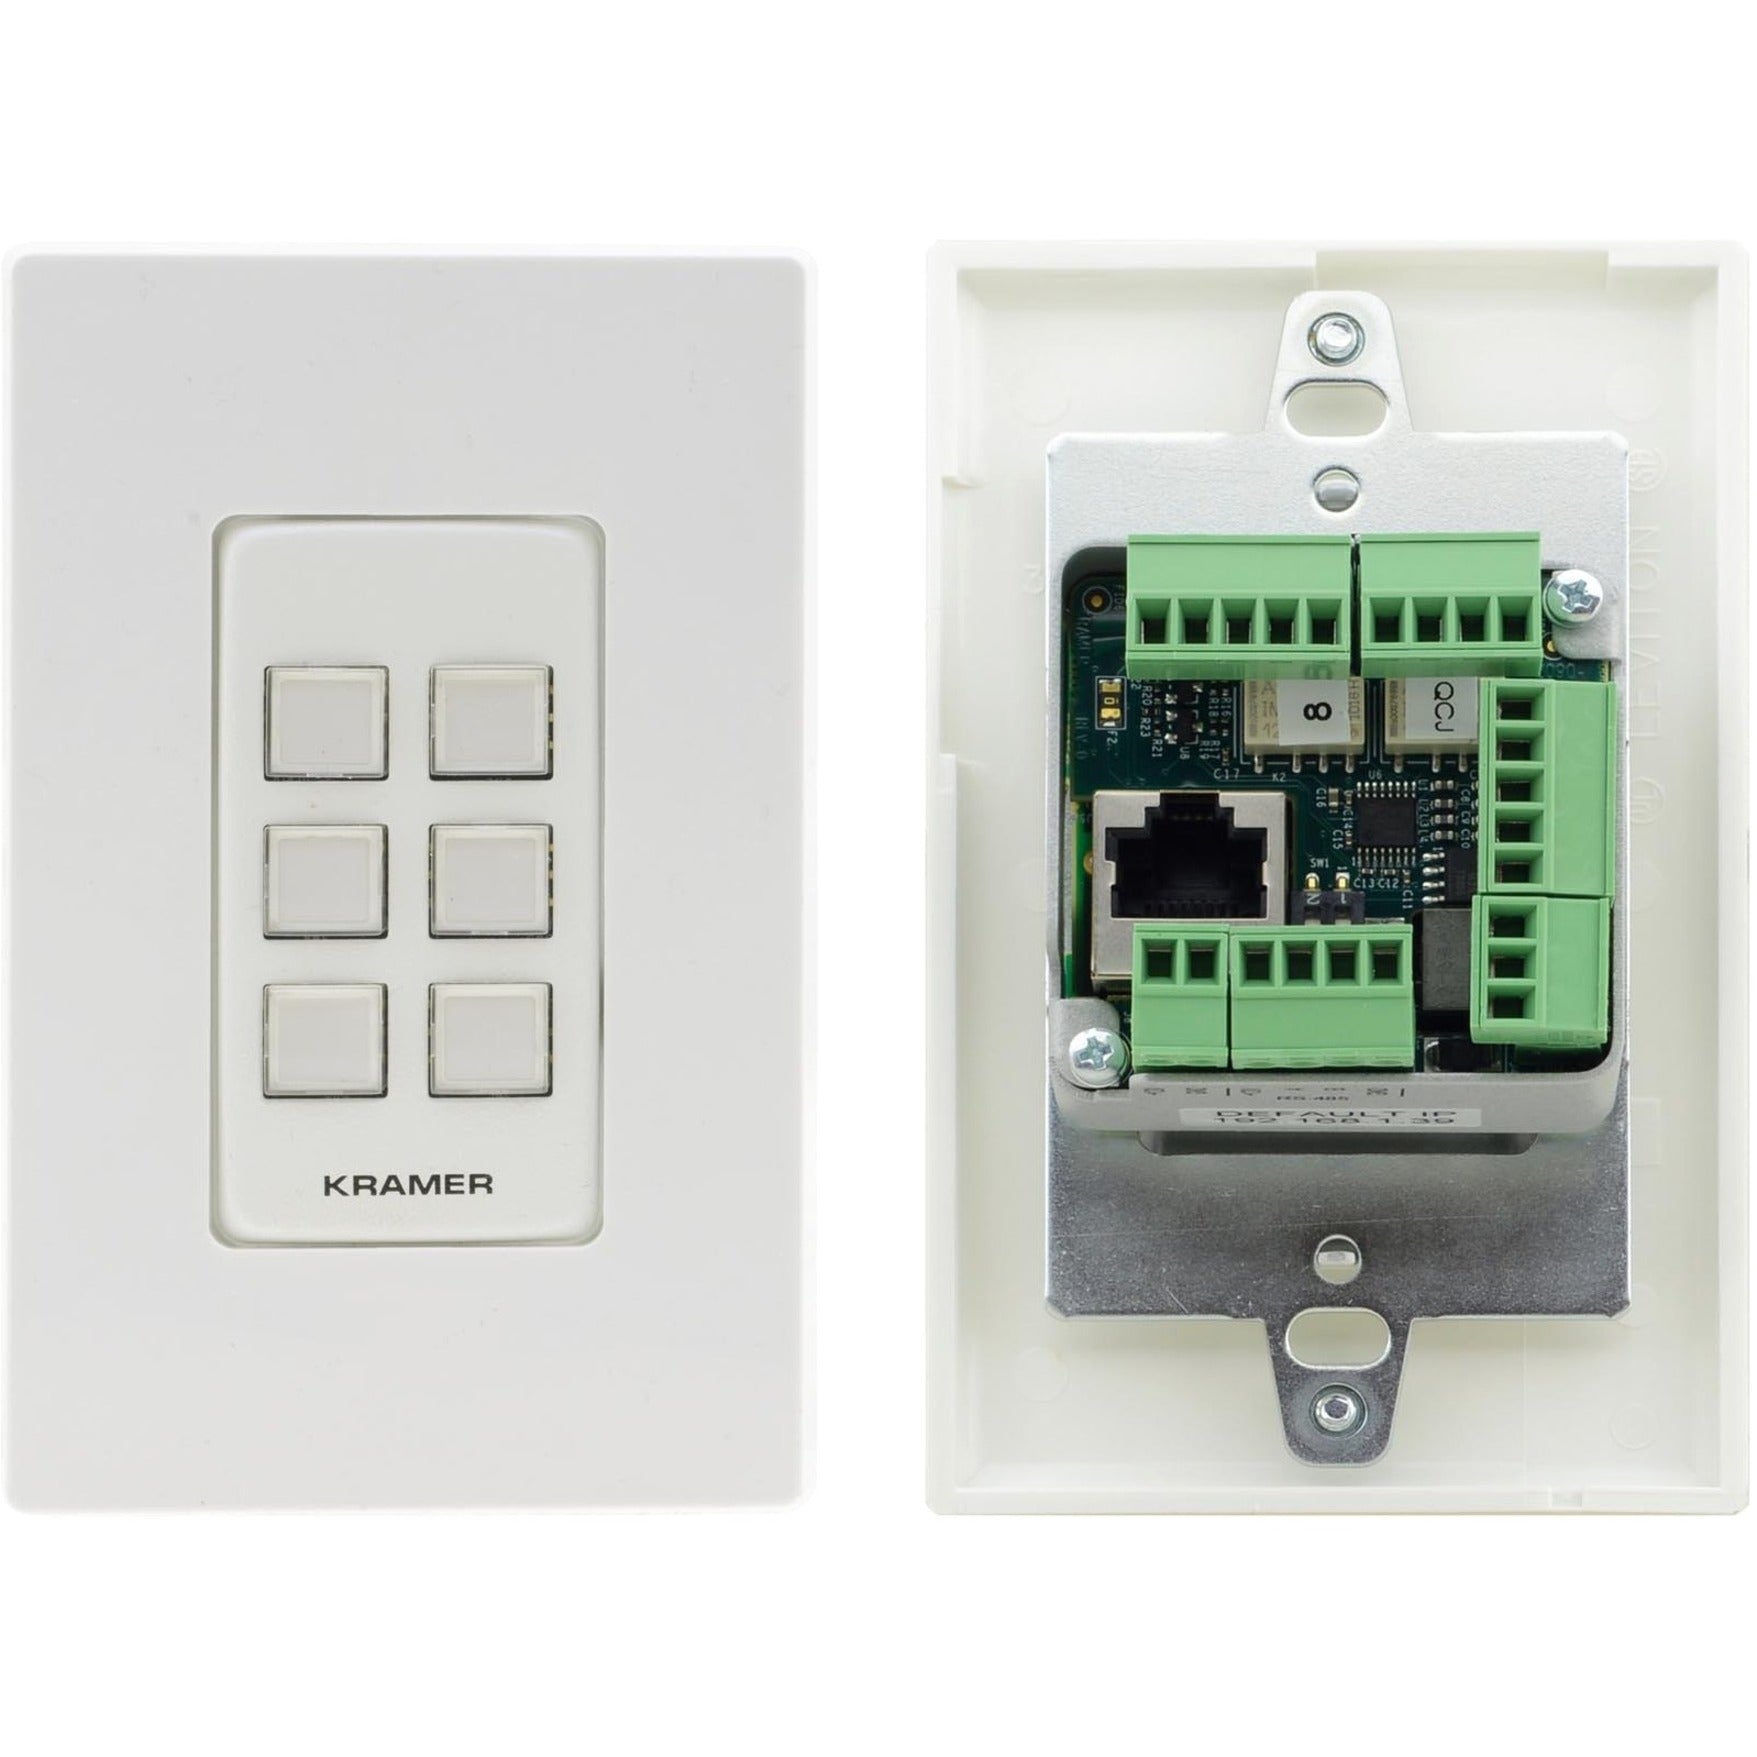 Kramer RC-206/US-D(W/B) 6-Button I/O Control Keypad, Wired A/V Control Panel